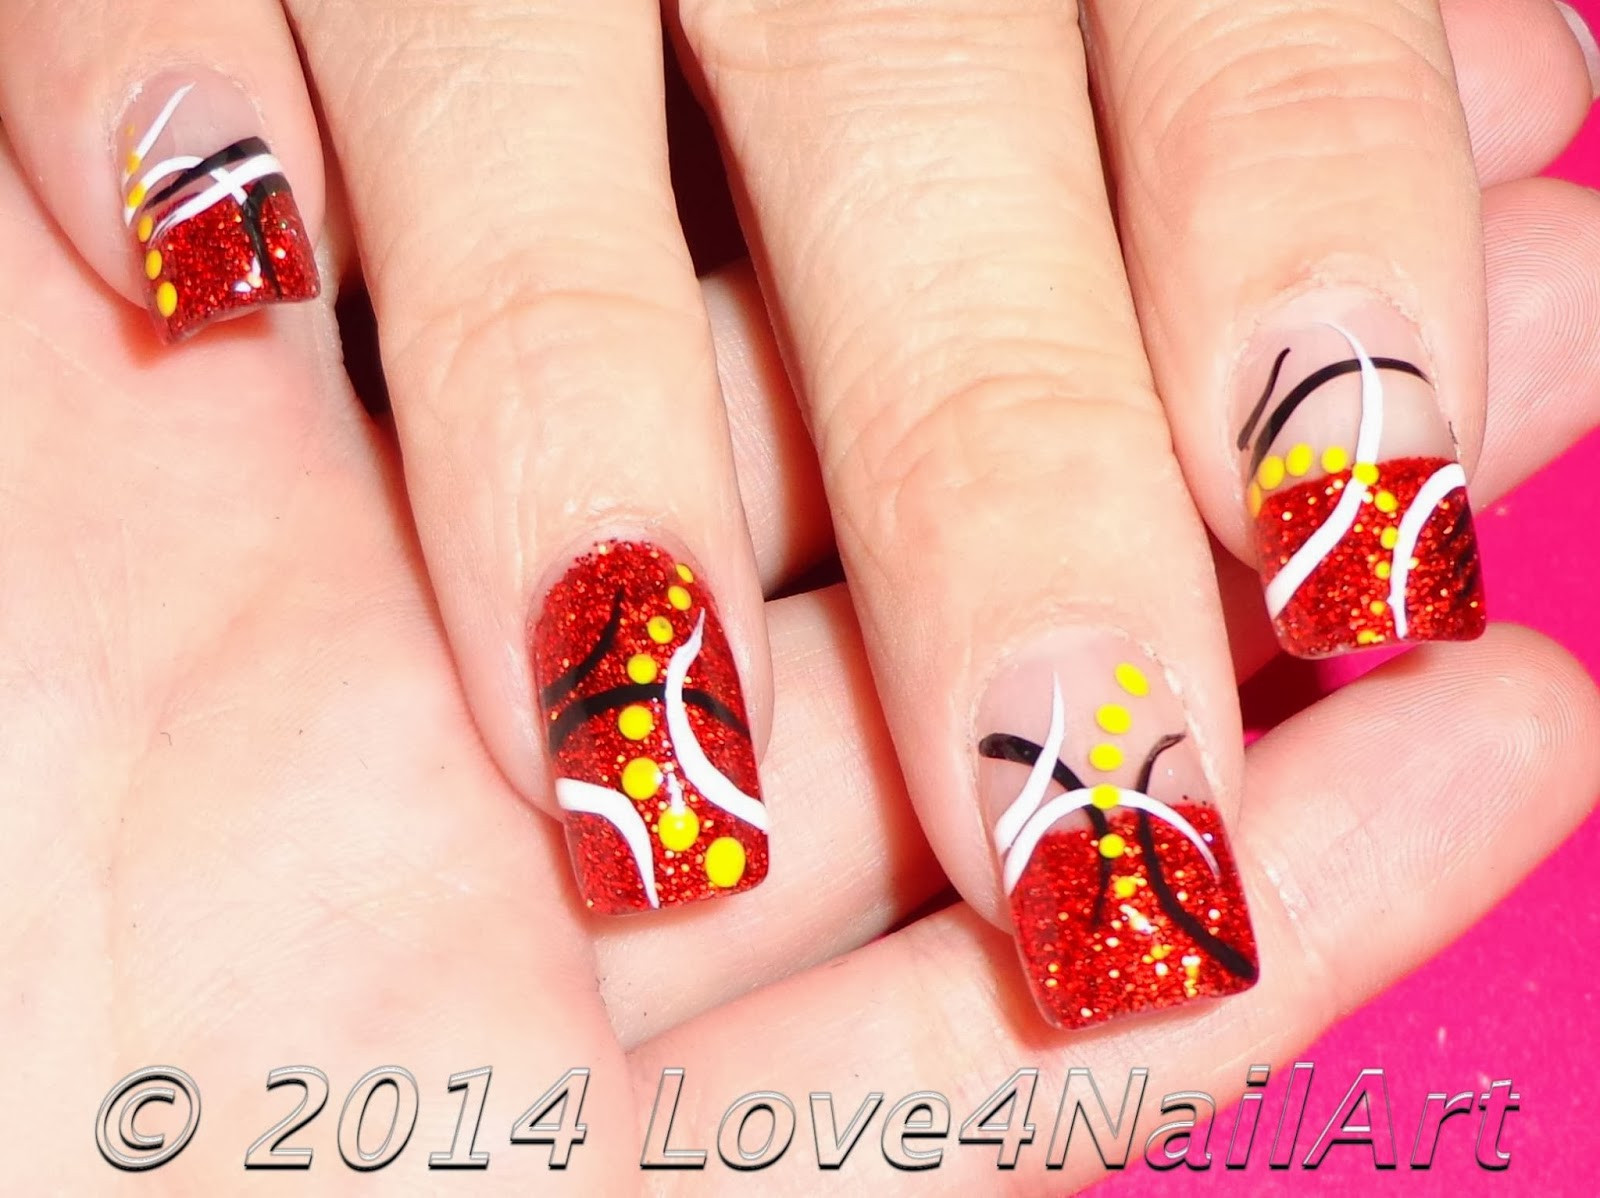 Arizona Cardinals Nail Designs
 Love4NailArt Arizona Cardinal Football Themed Acrylic Nails